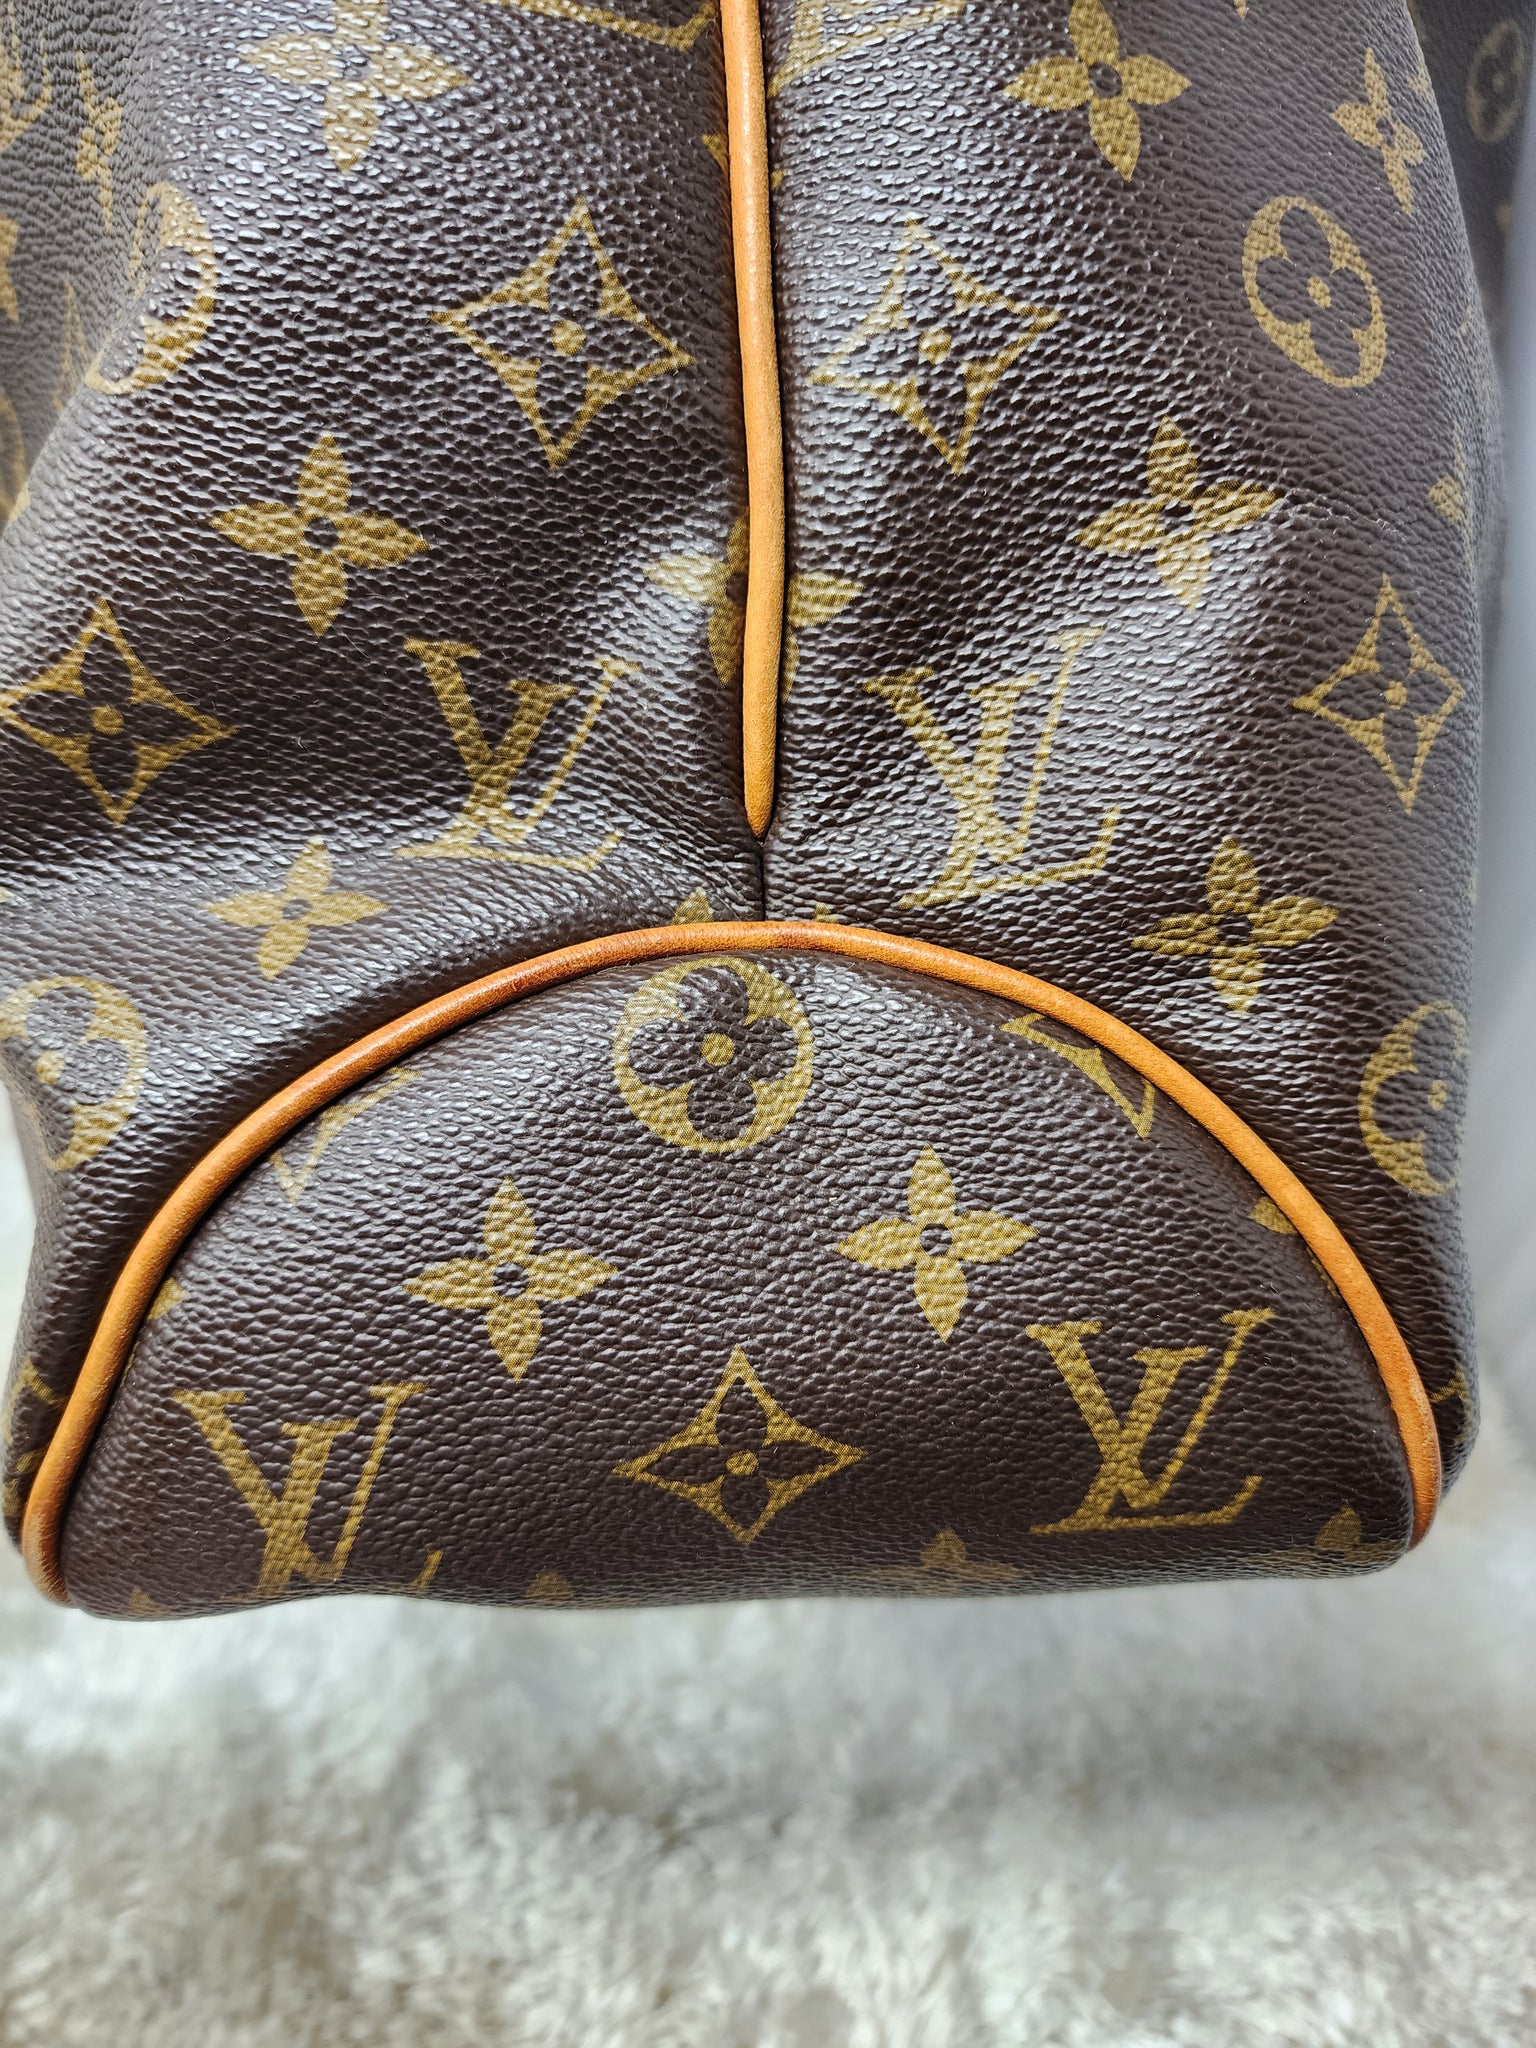 ❤️SOLD❤️Louis Vuitton Delightful MM My Price: $1,150 Retail